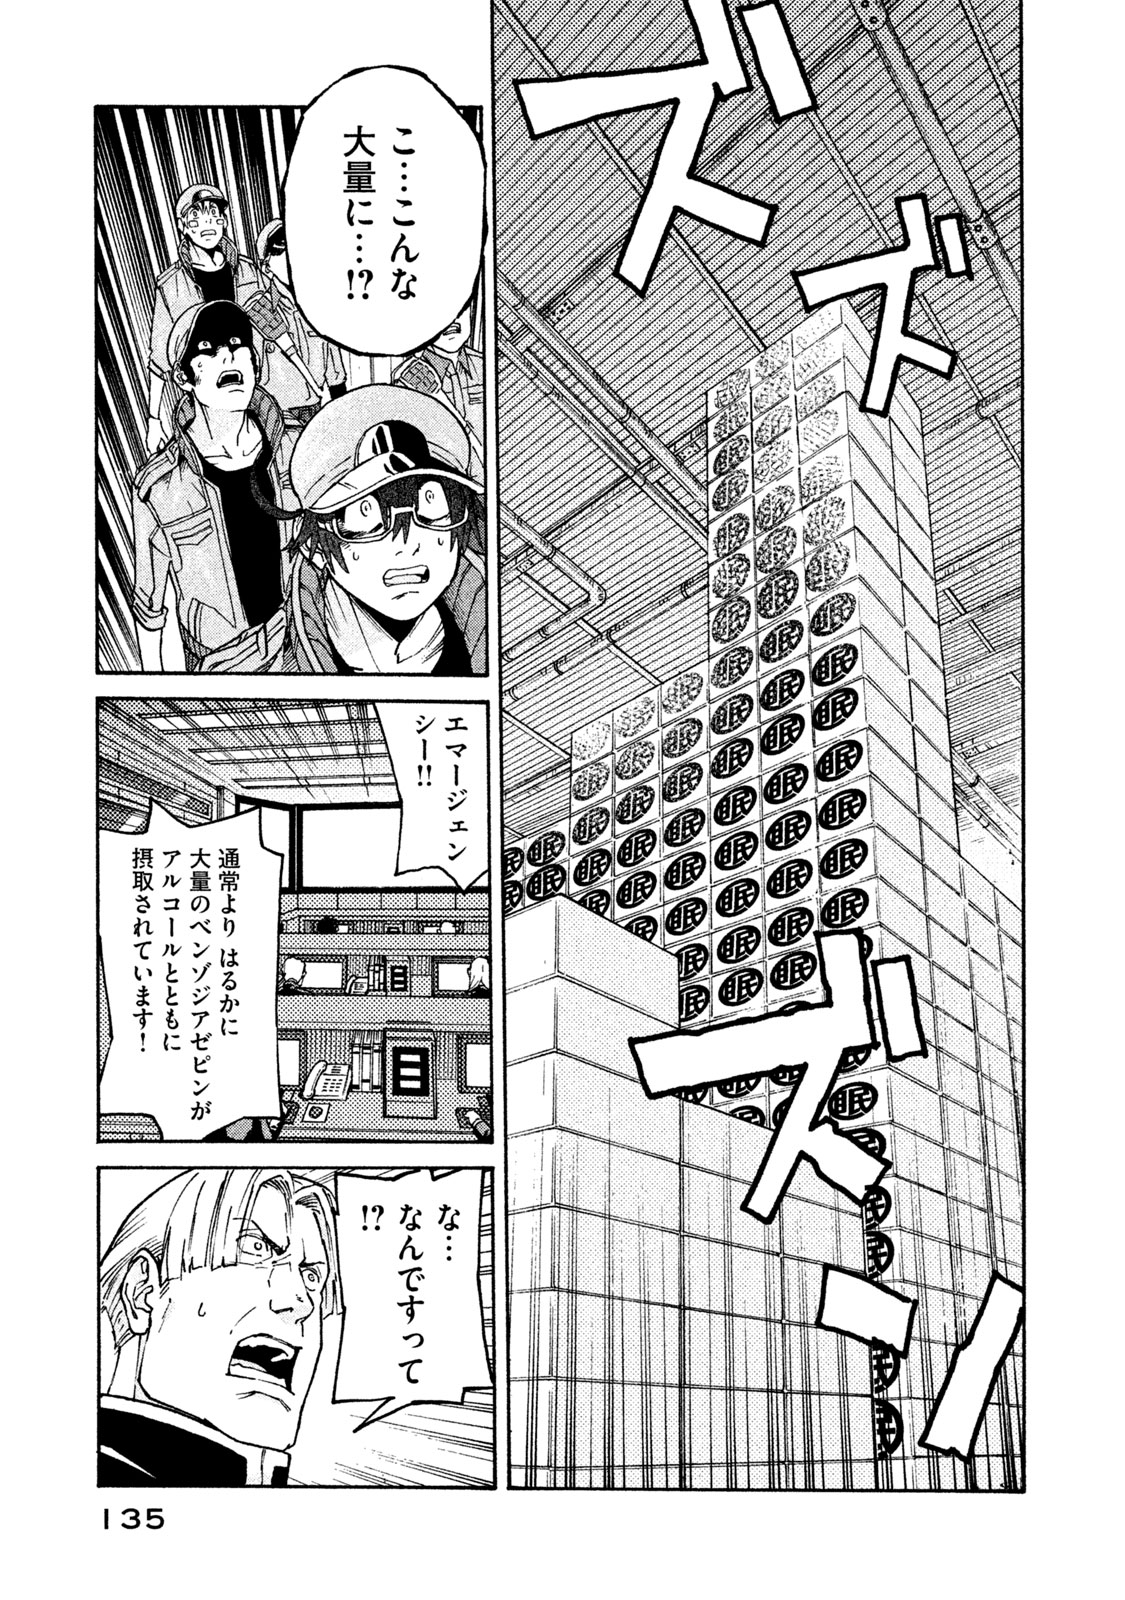 Hataraku Saibou BLACK - Chapter 31 - Page 11